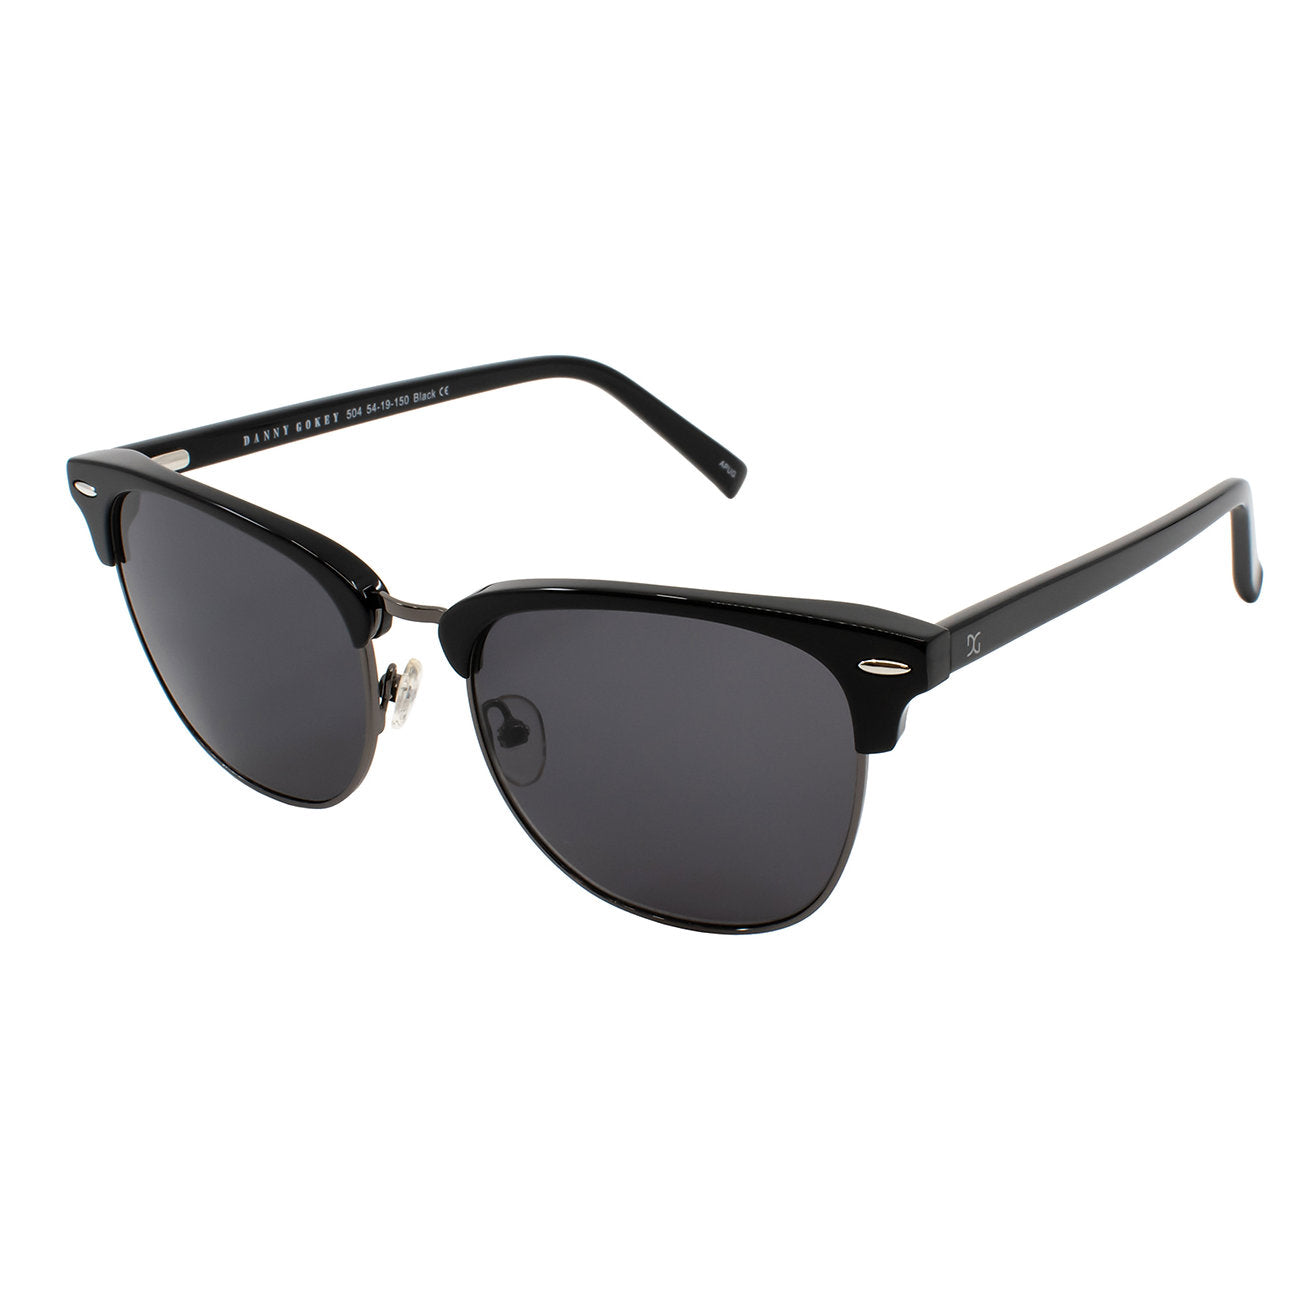 Danny Gokey sunglasses model 504 black